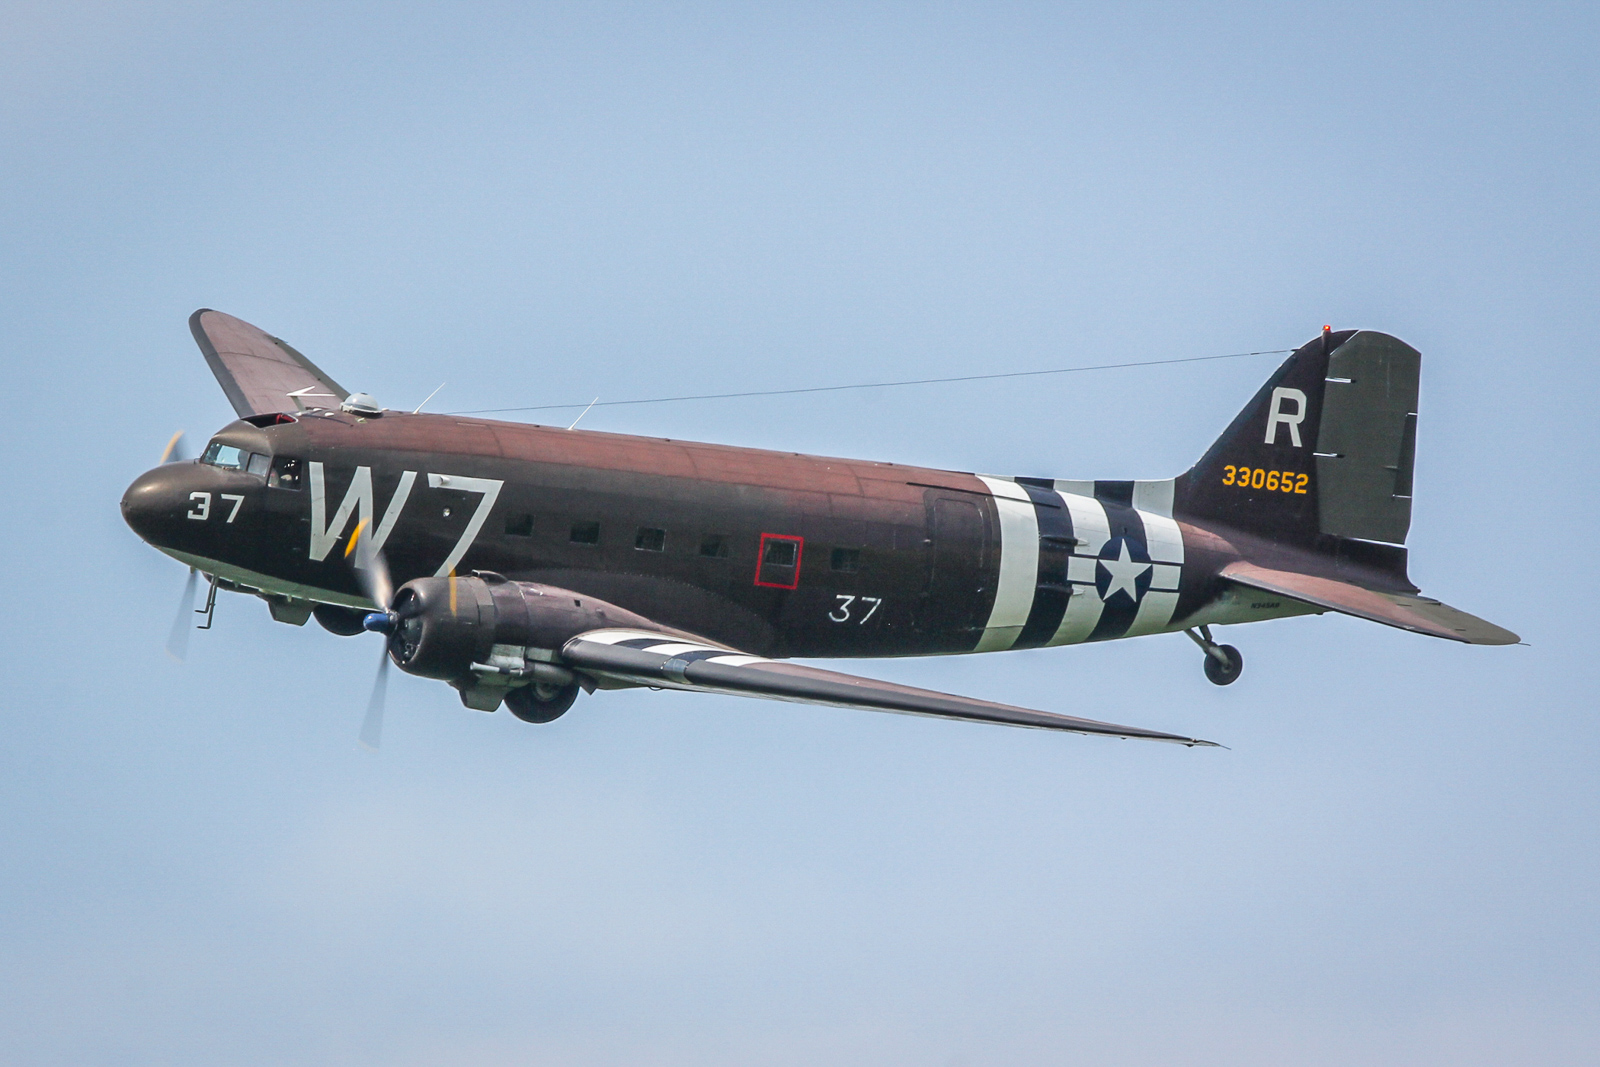 The National Warplane Museum's C-47 'Whiskey 7' flown by Chris Polhemus and John Lindsay. (photo by Tom Pawlesh)